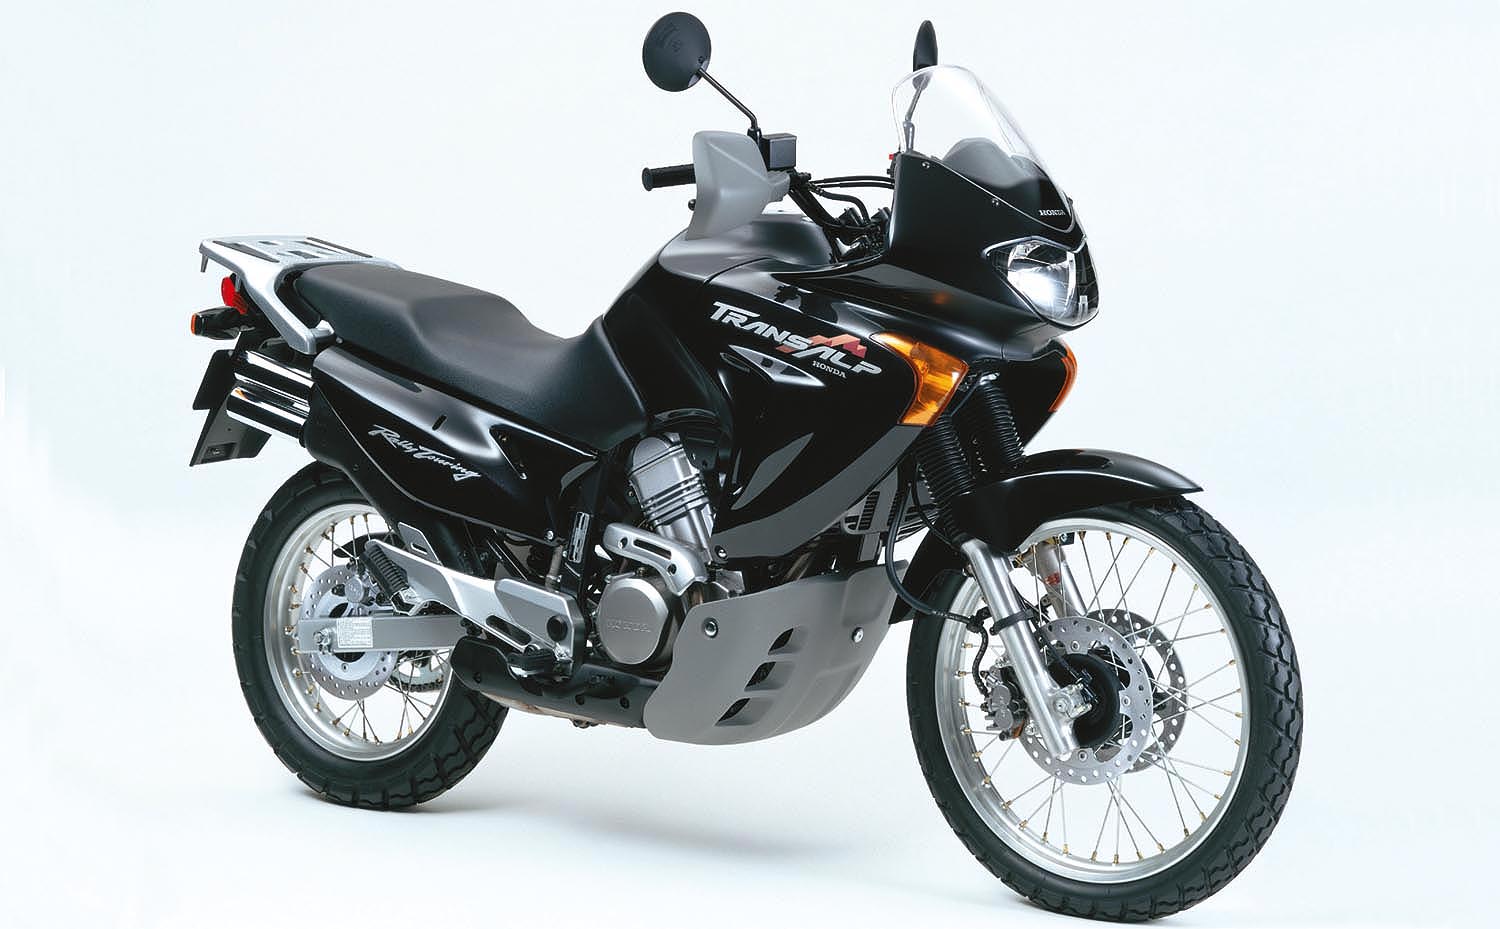 Honda xl 600 v transalp: обзор и технические характеристики